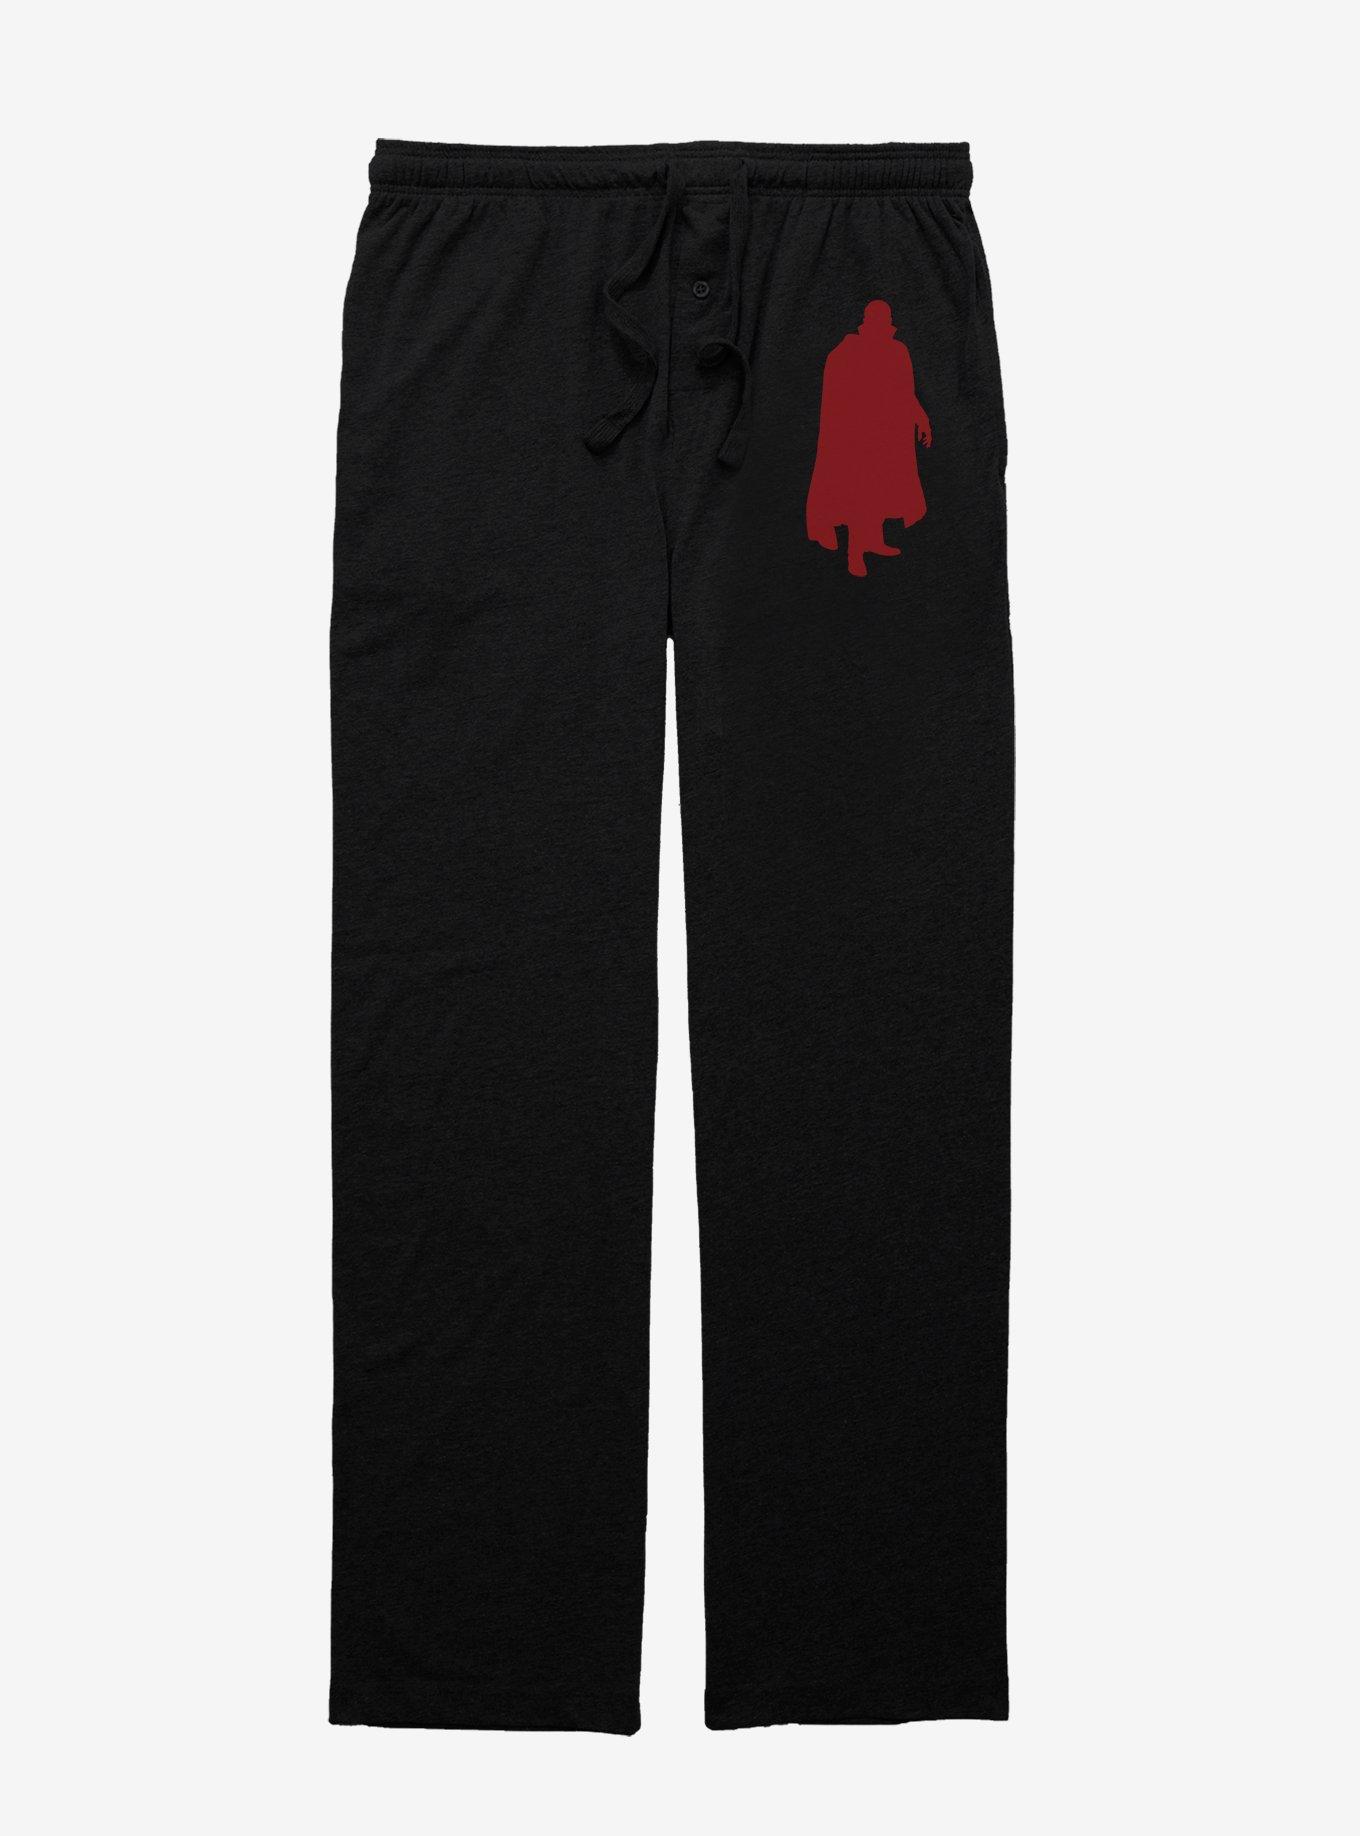 Dracula Silhouette Pajama Pants